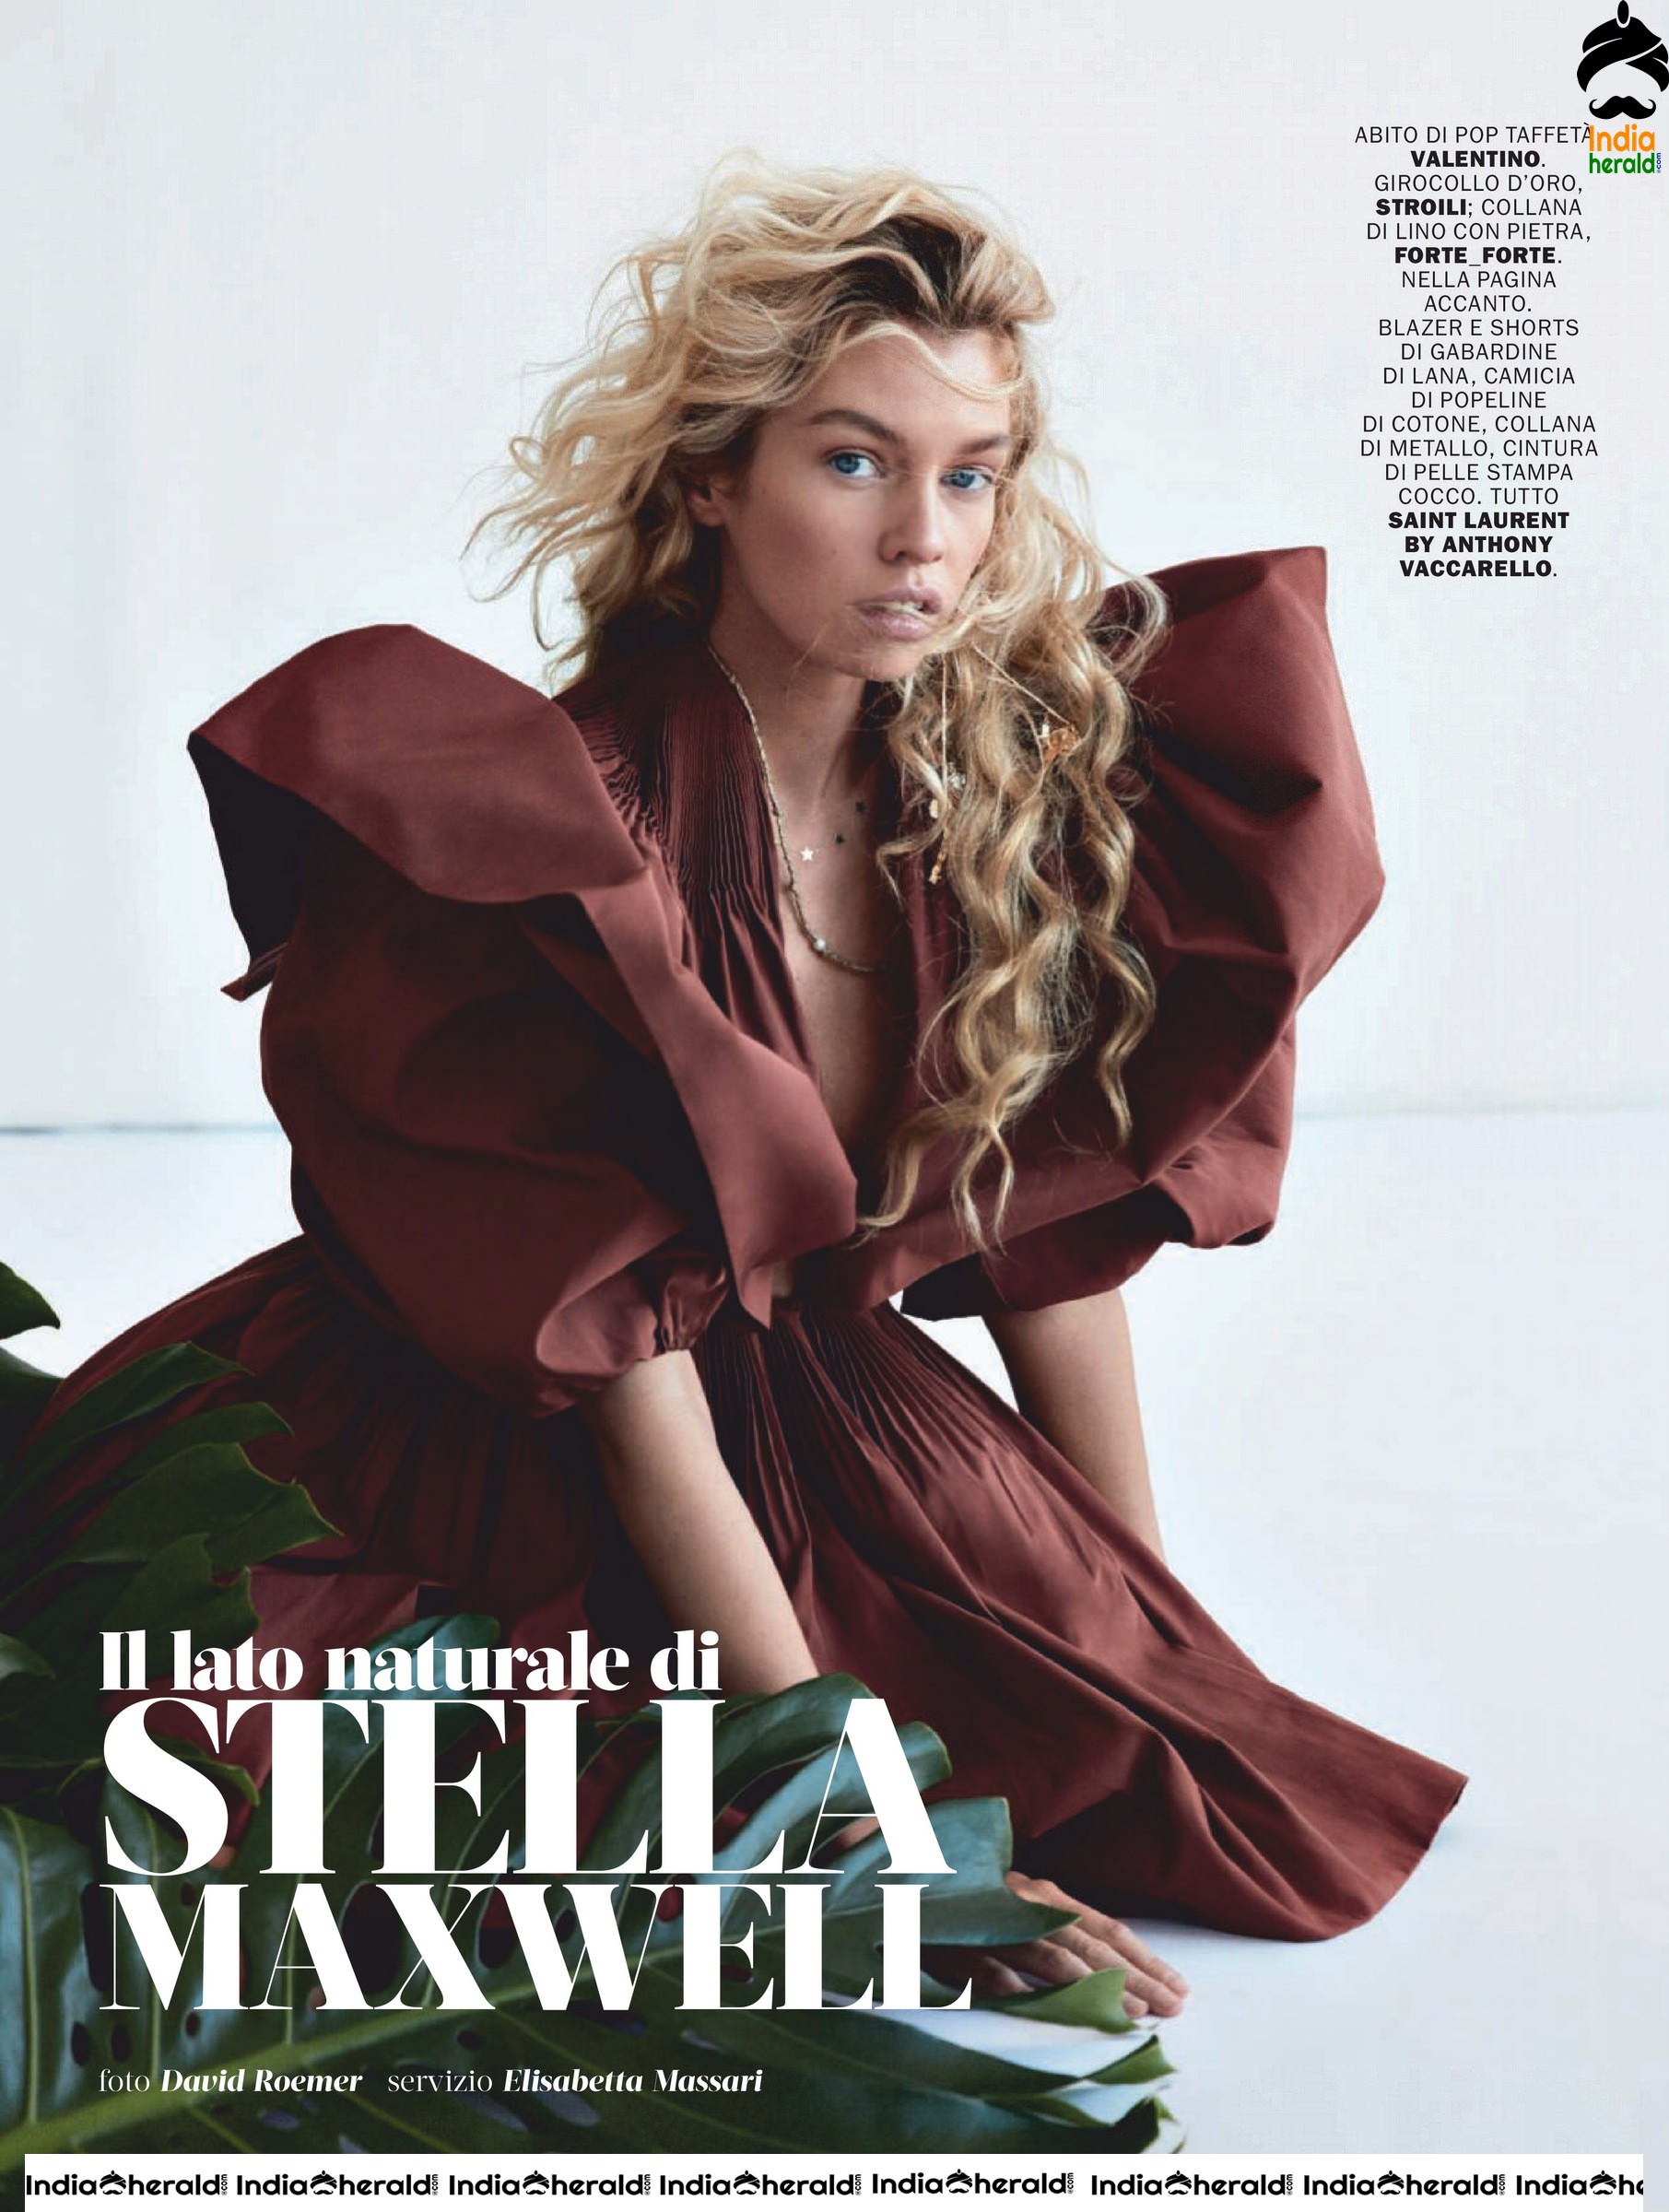 Stella Maxwell features in Marie Claire Magazine Italia March 2020 edition